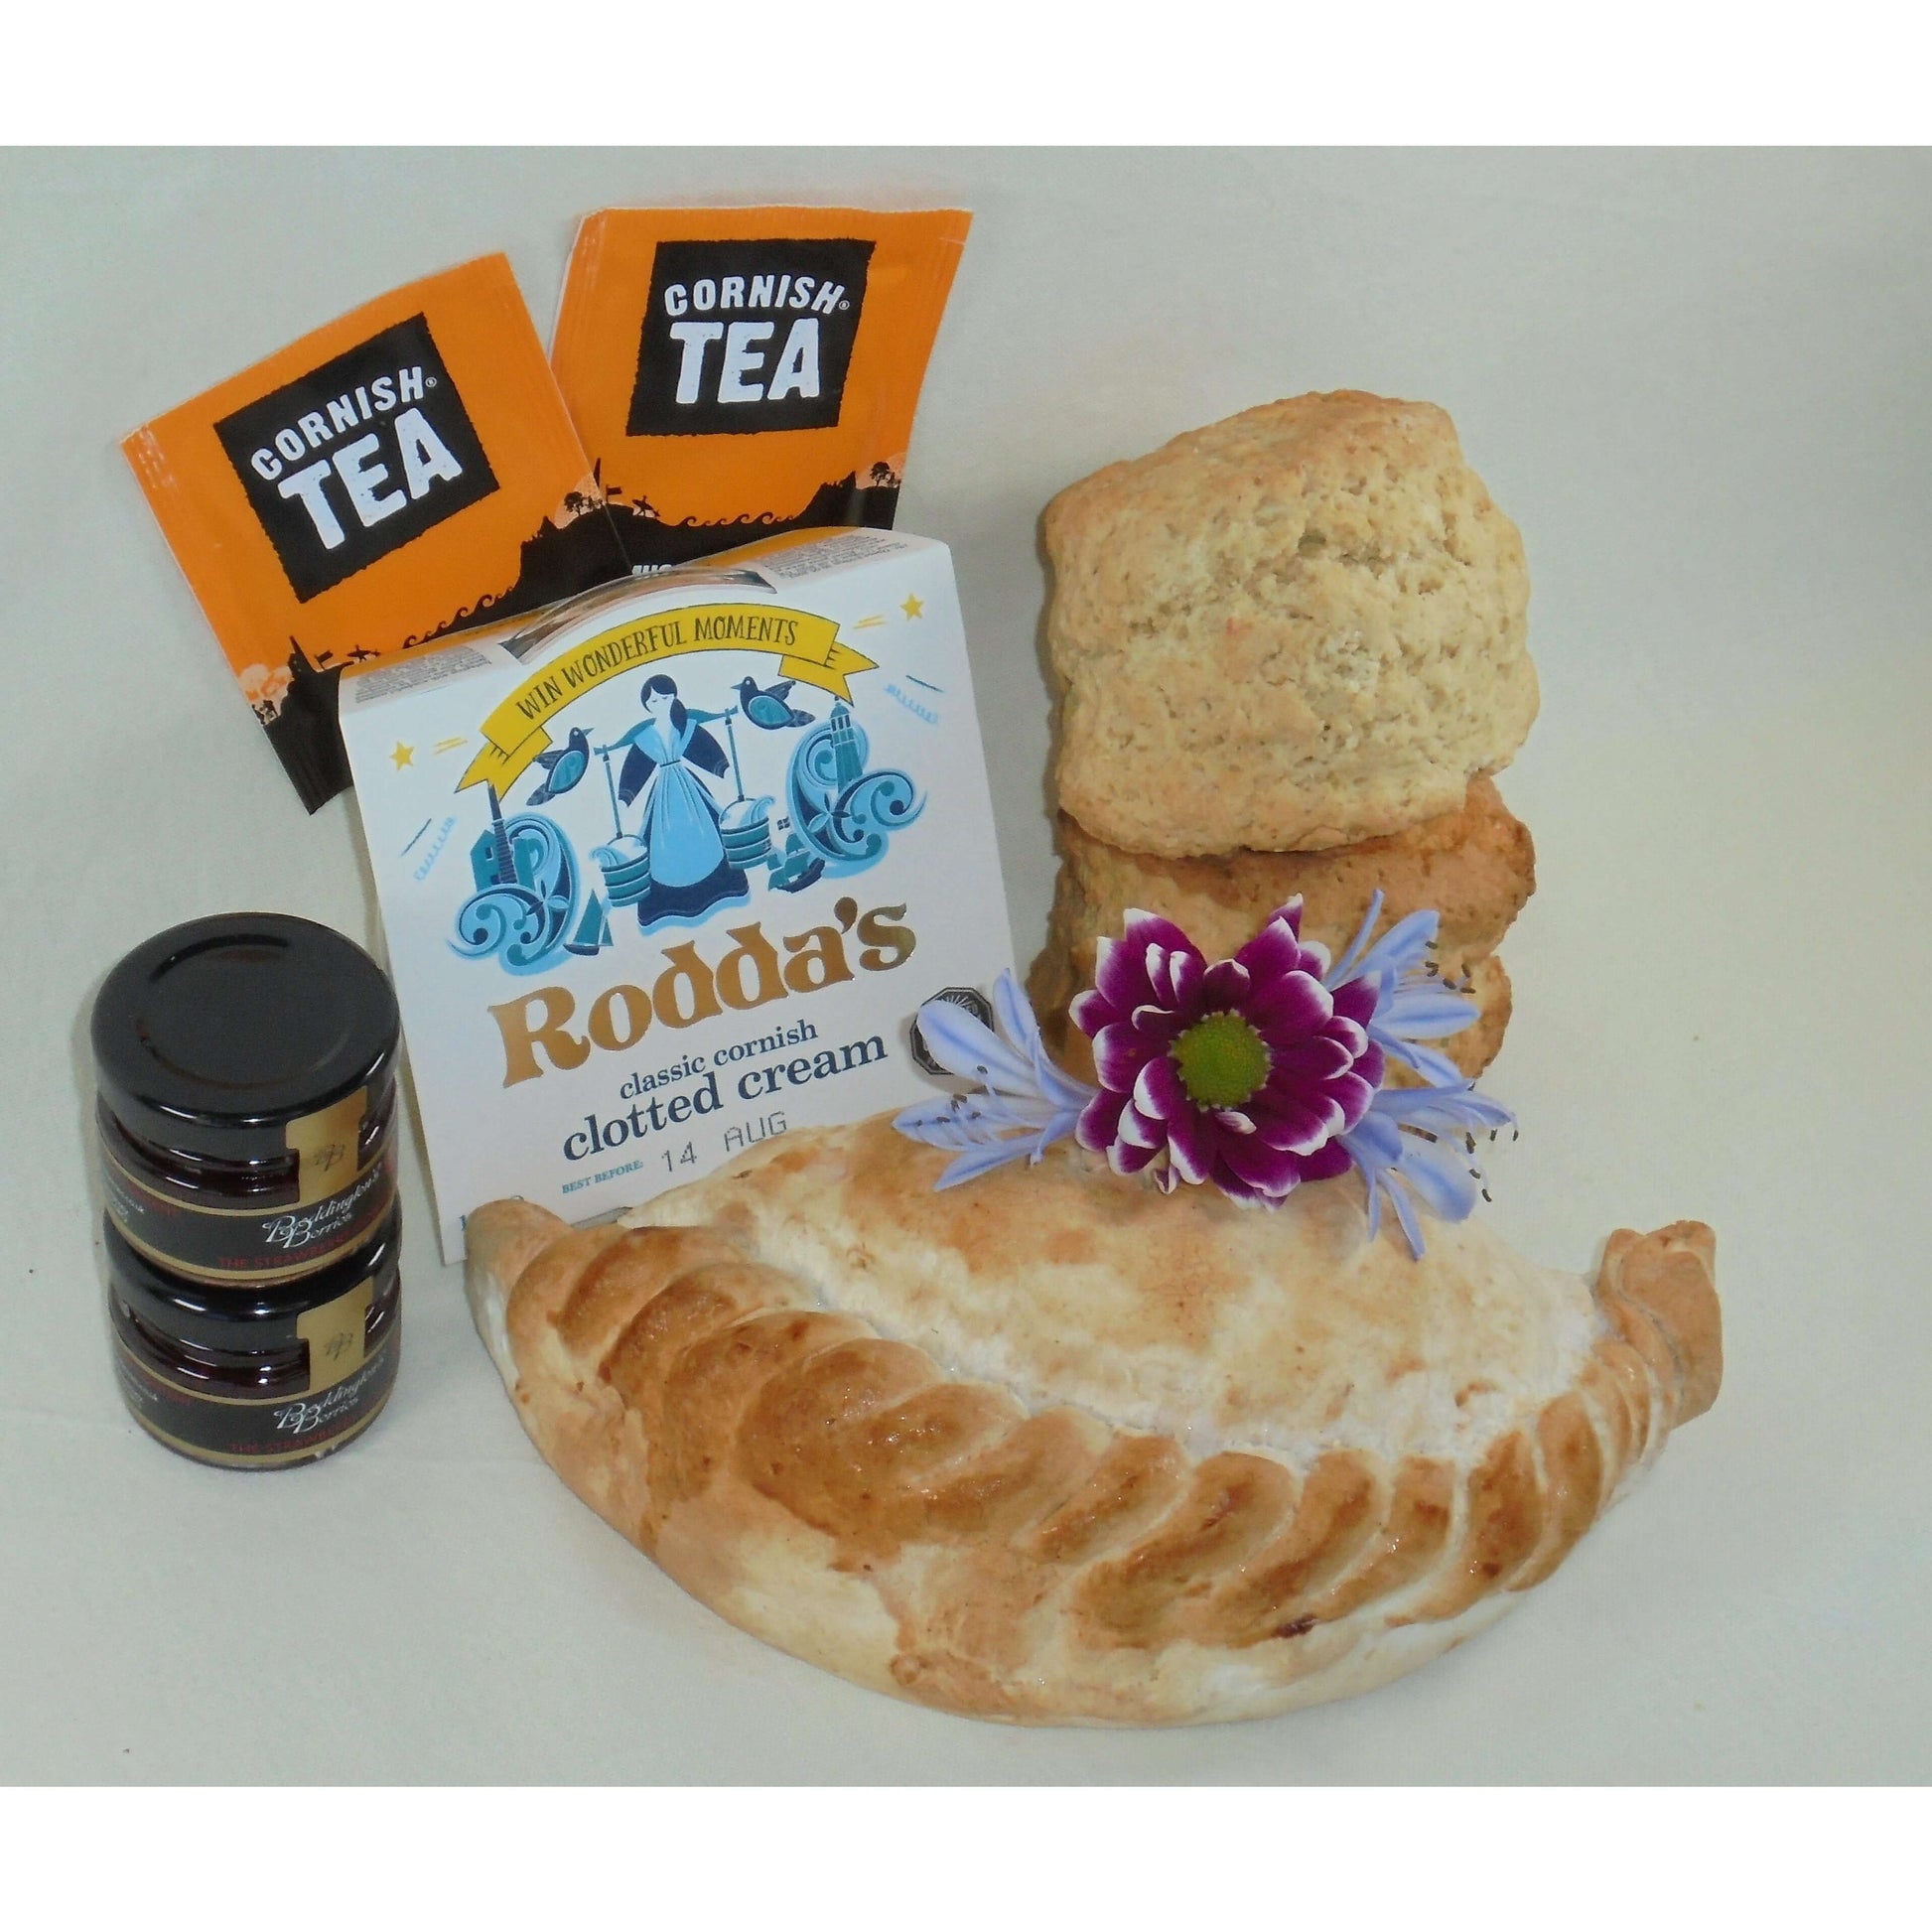 'Proper Job' for one - Cream tea with pasty - The Cornish Scone Company